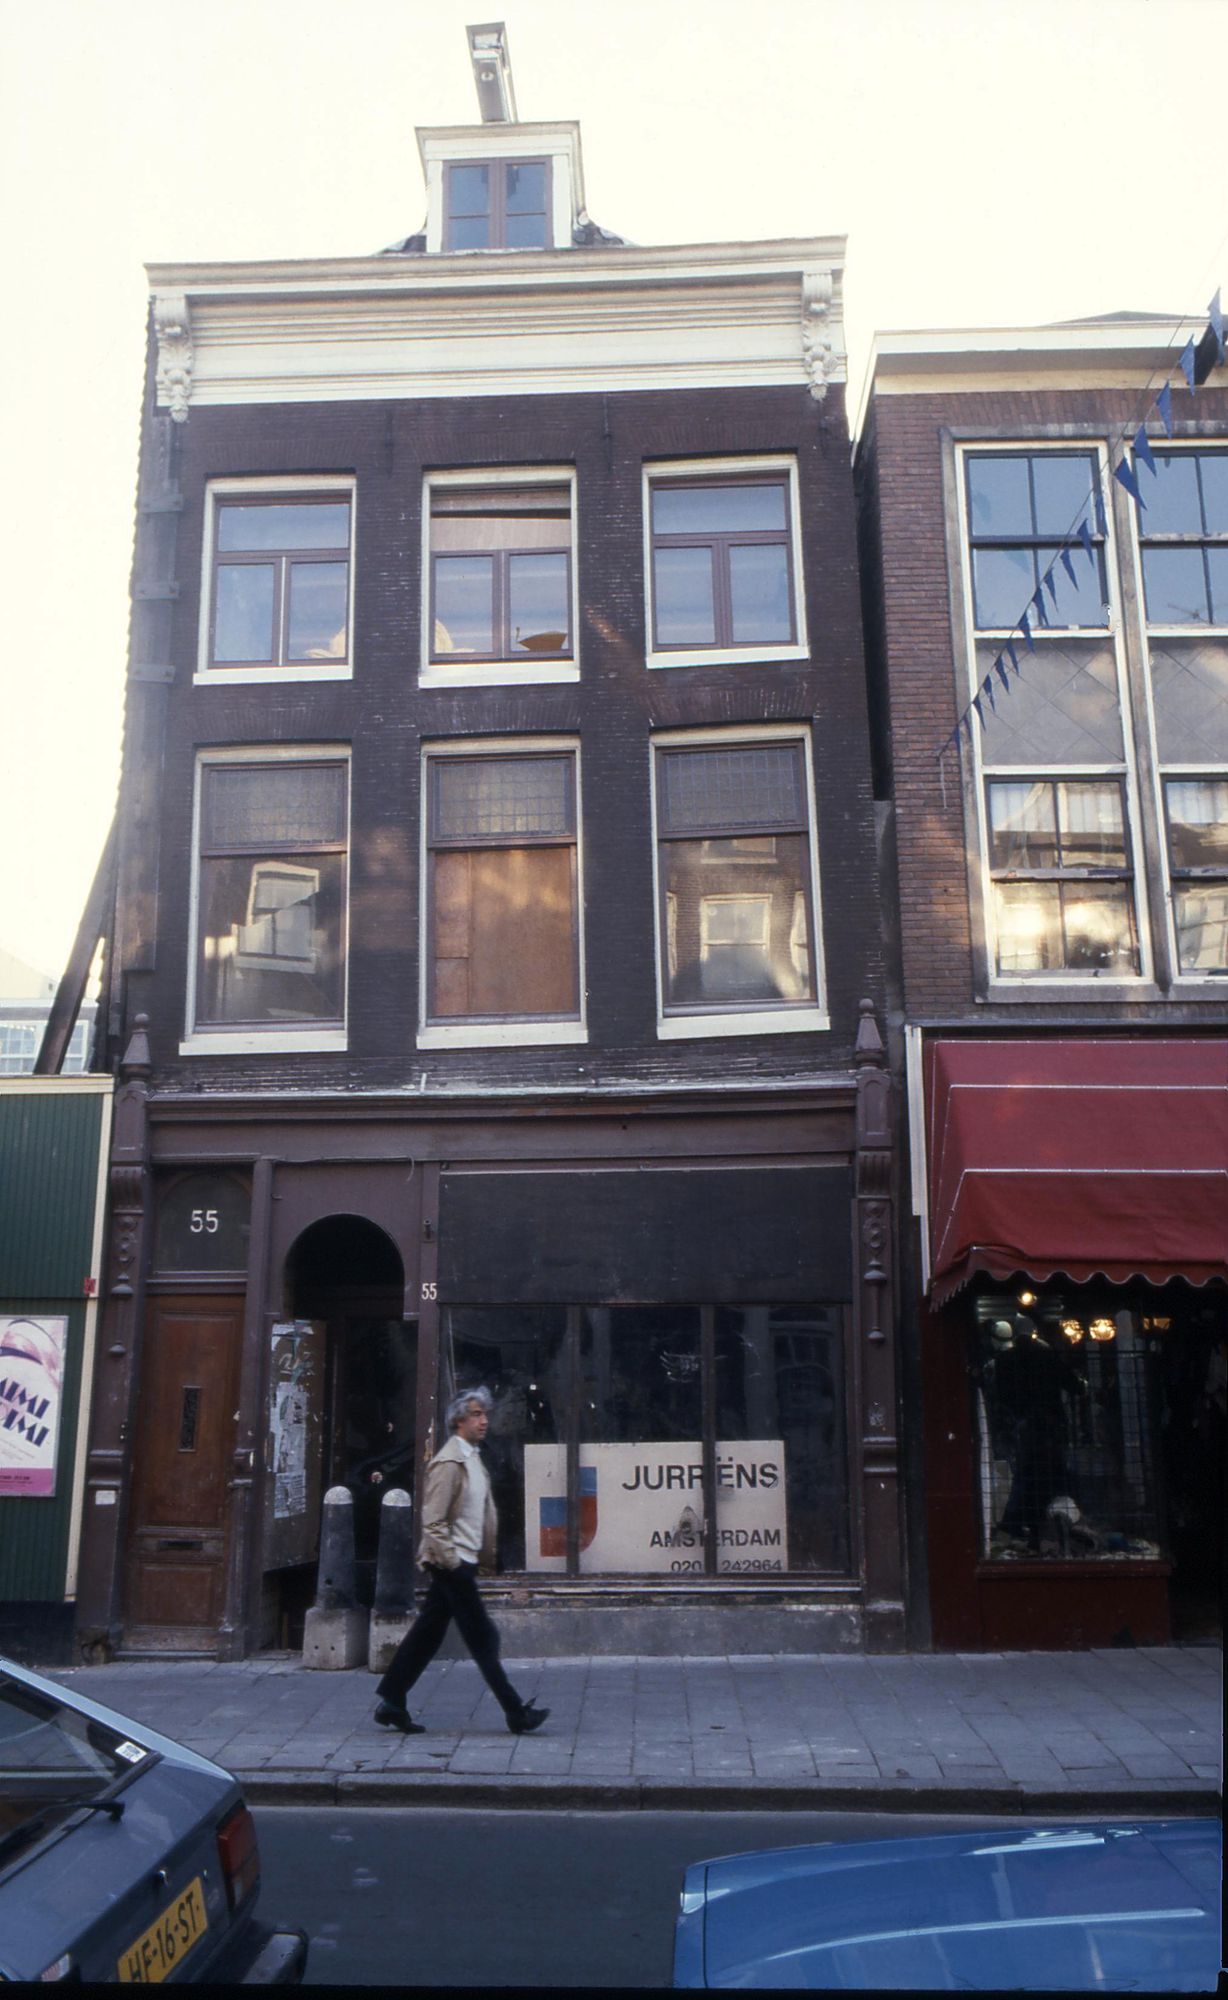 Haarlemmerdijk 55 - Amsterdam